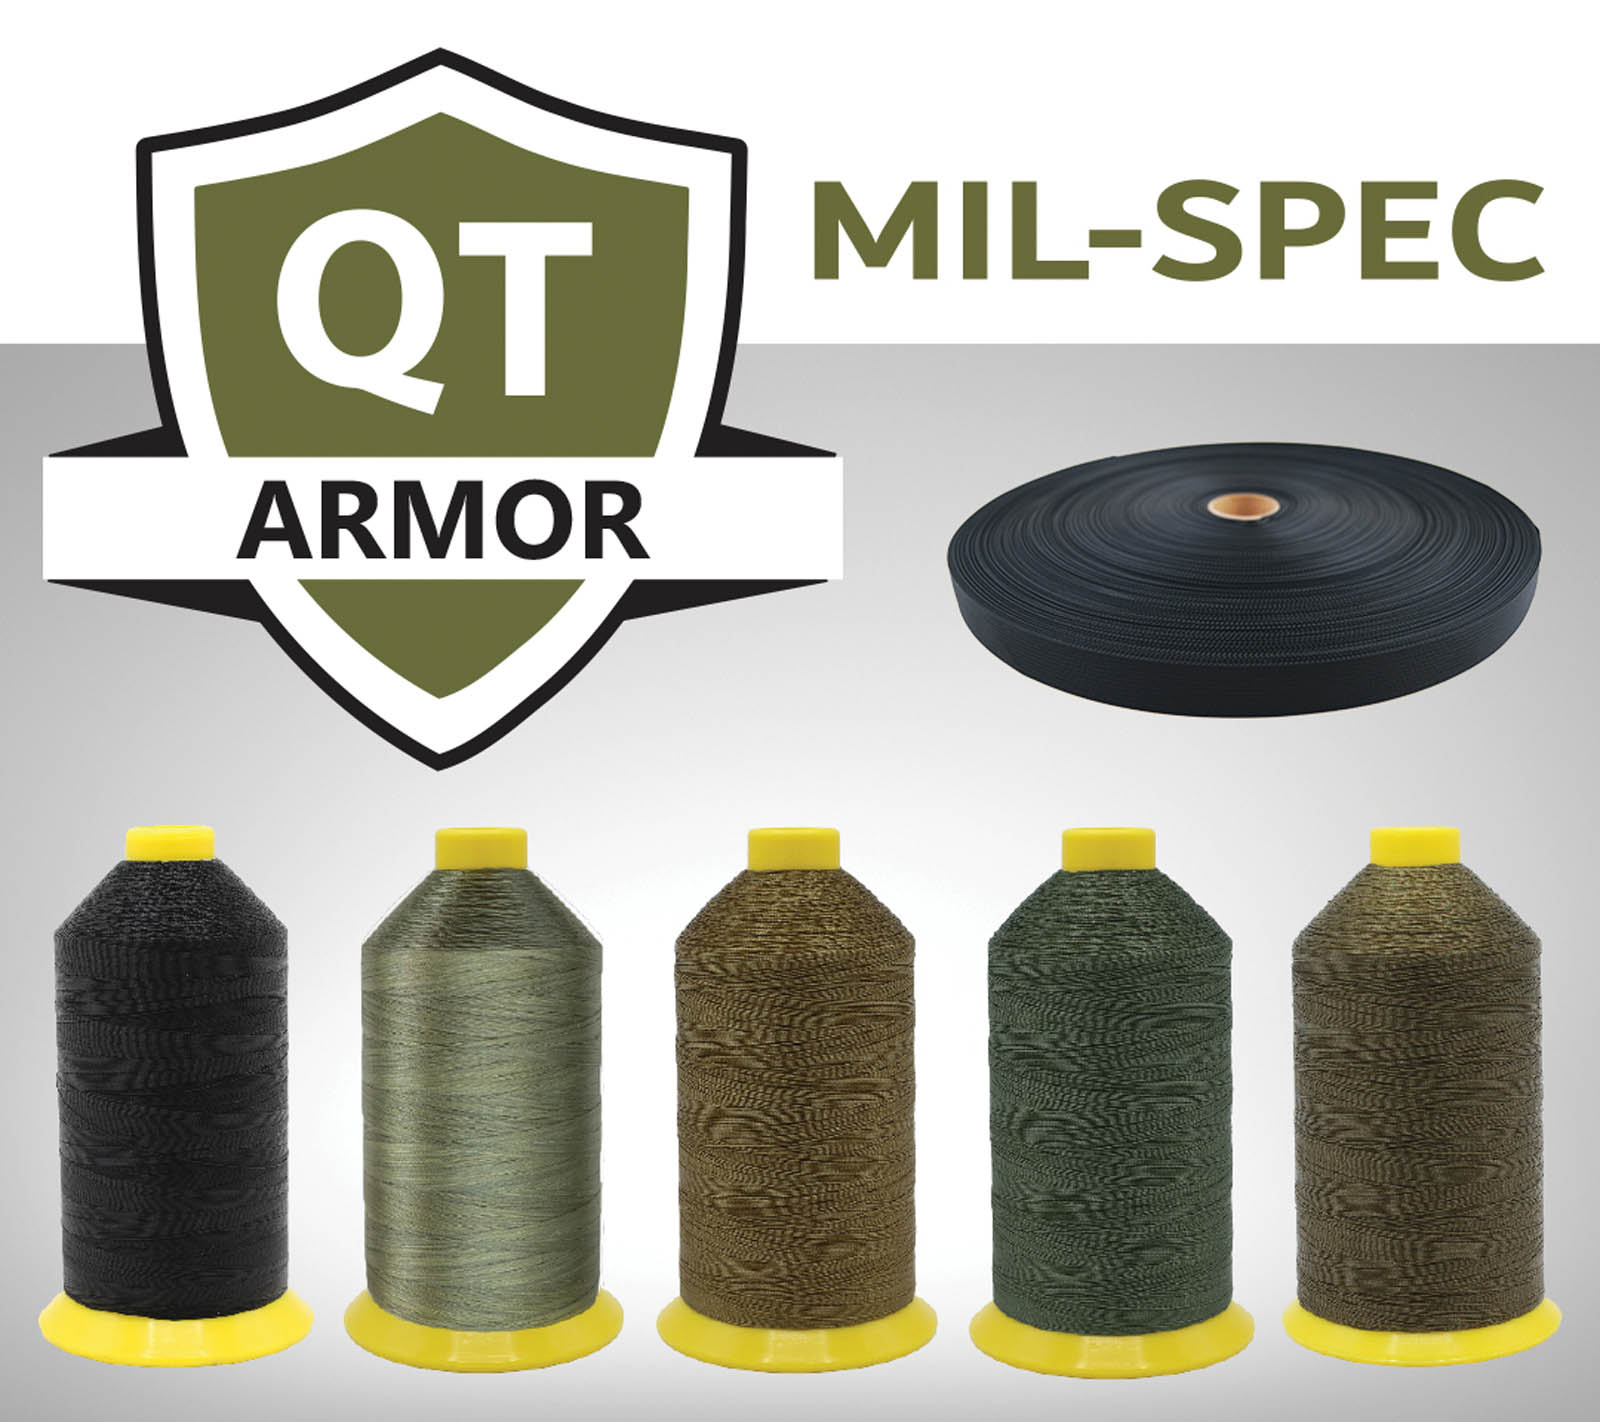 QT Armor Mil-Spec Products Image